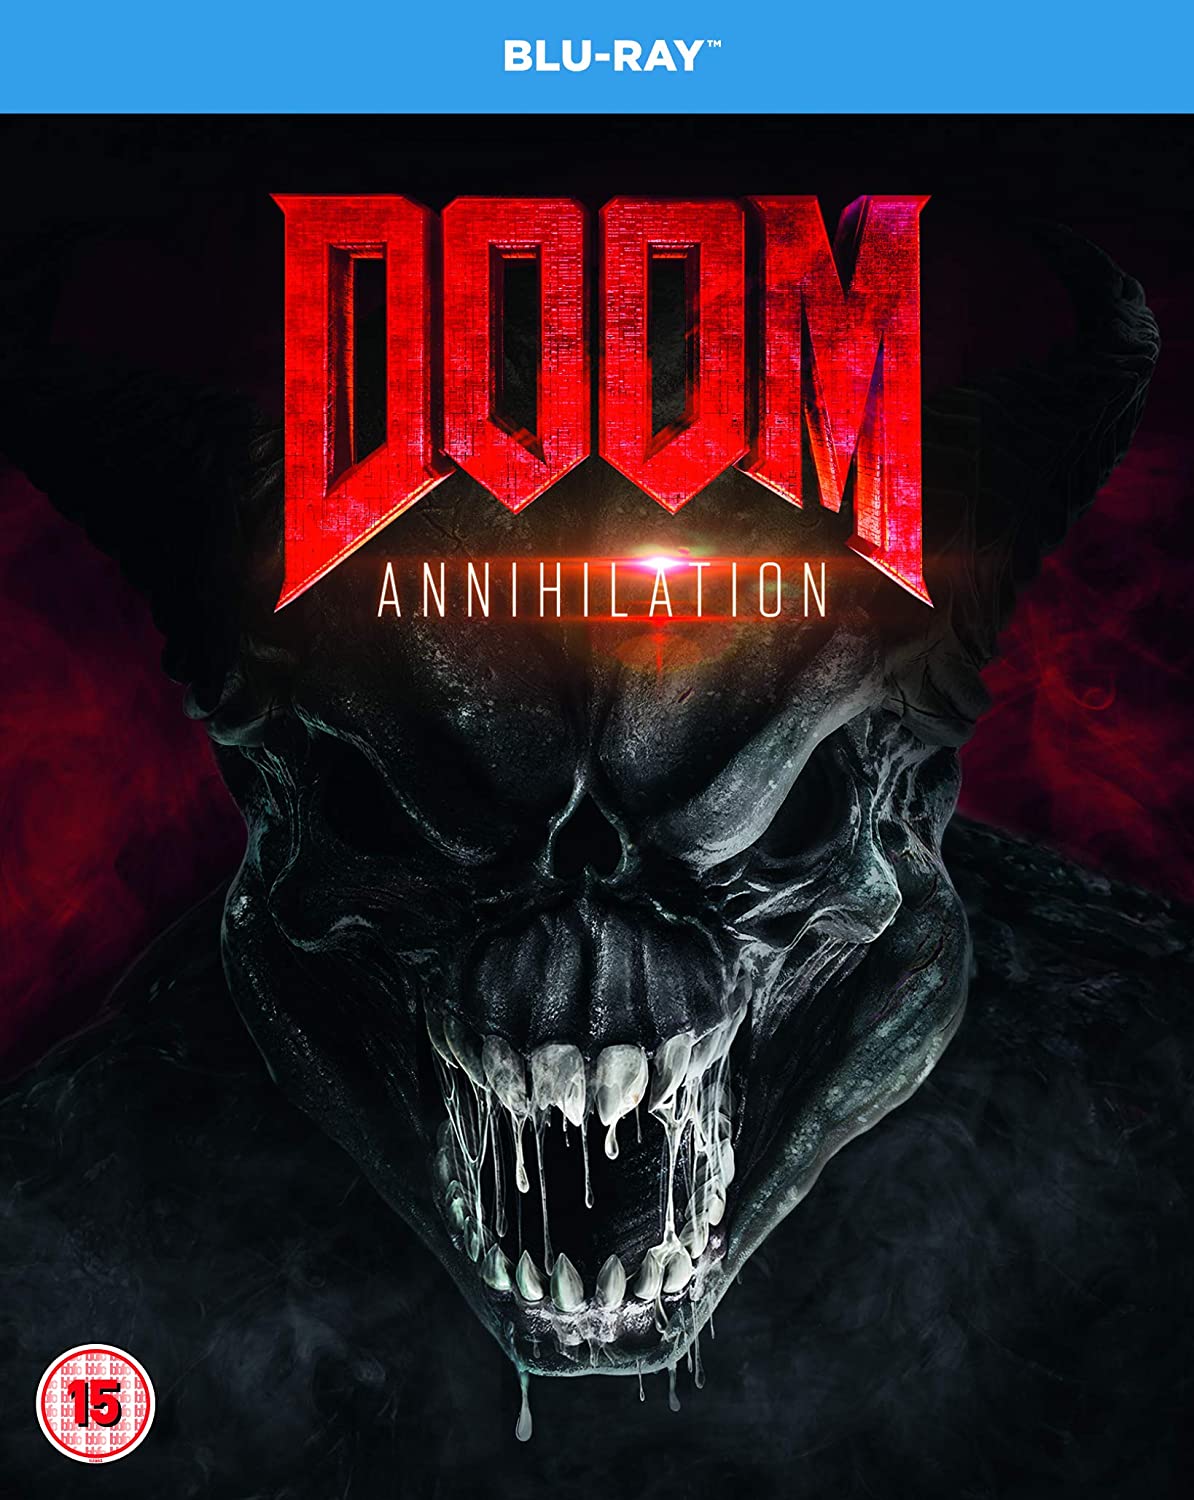 Doom: Annihilation (Blu-ray)